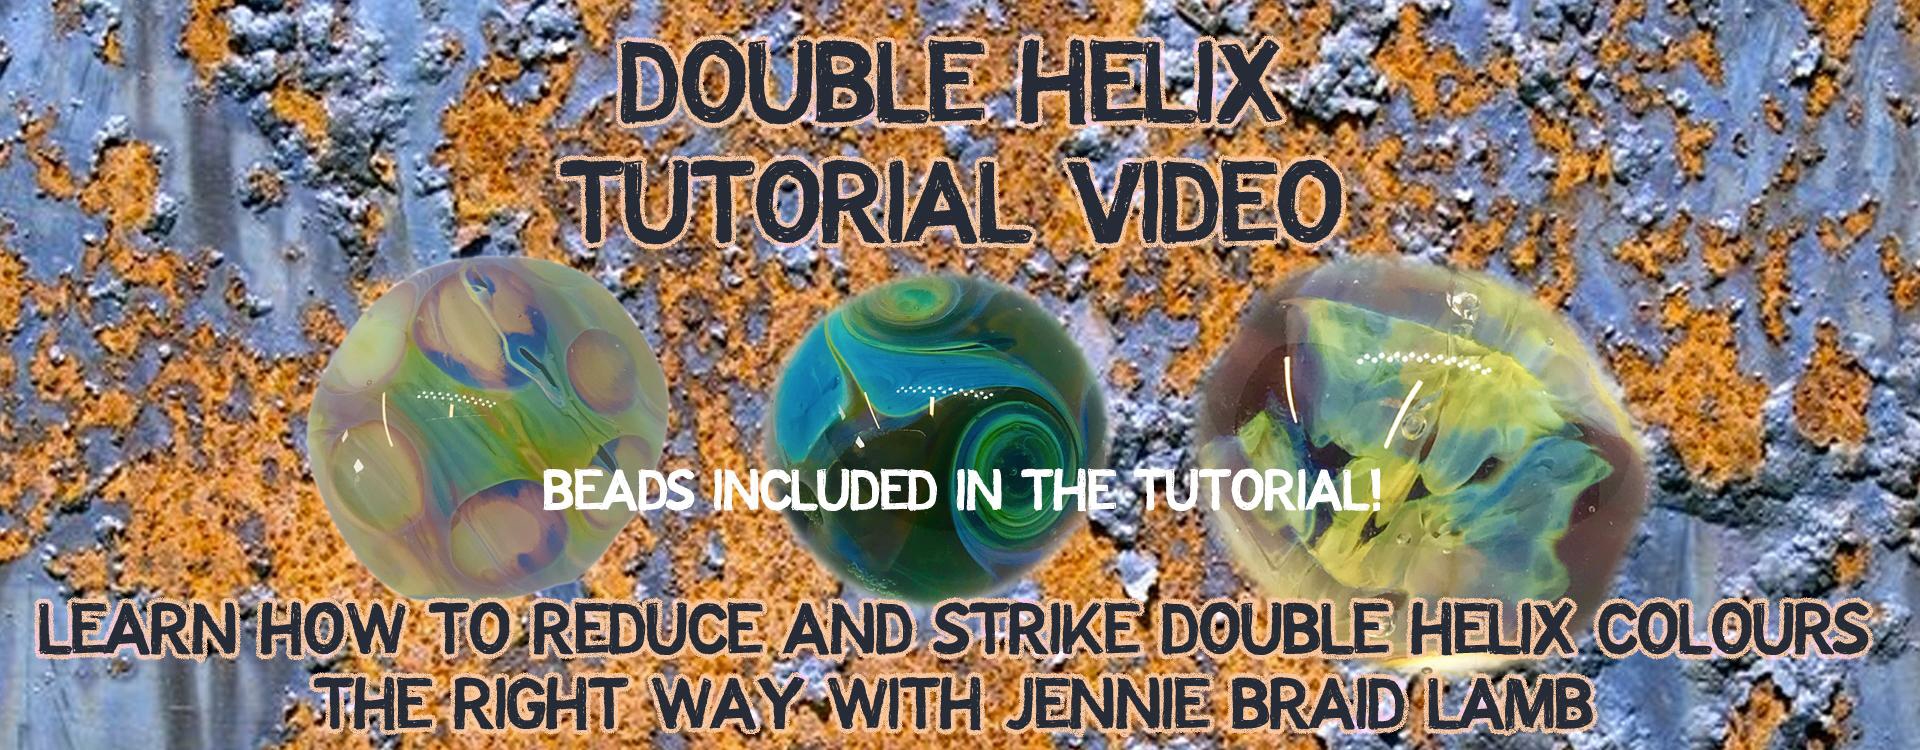 Double Helix Video